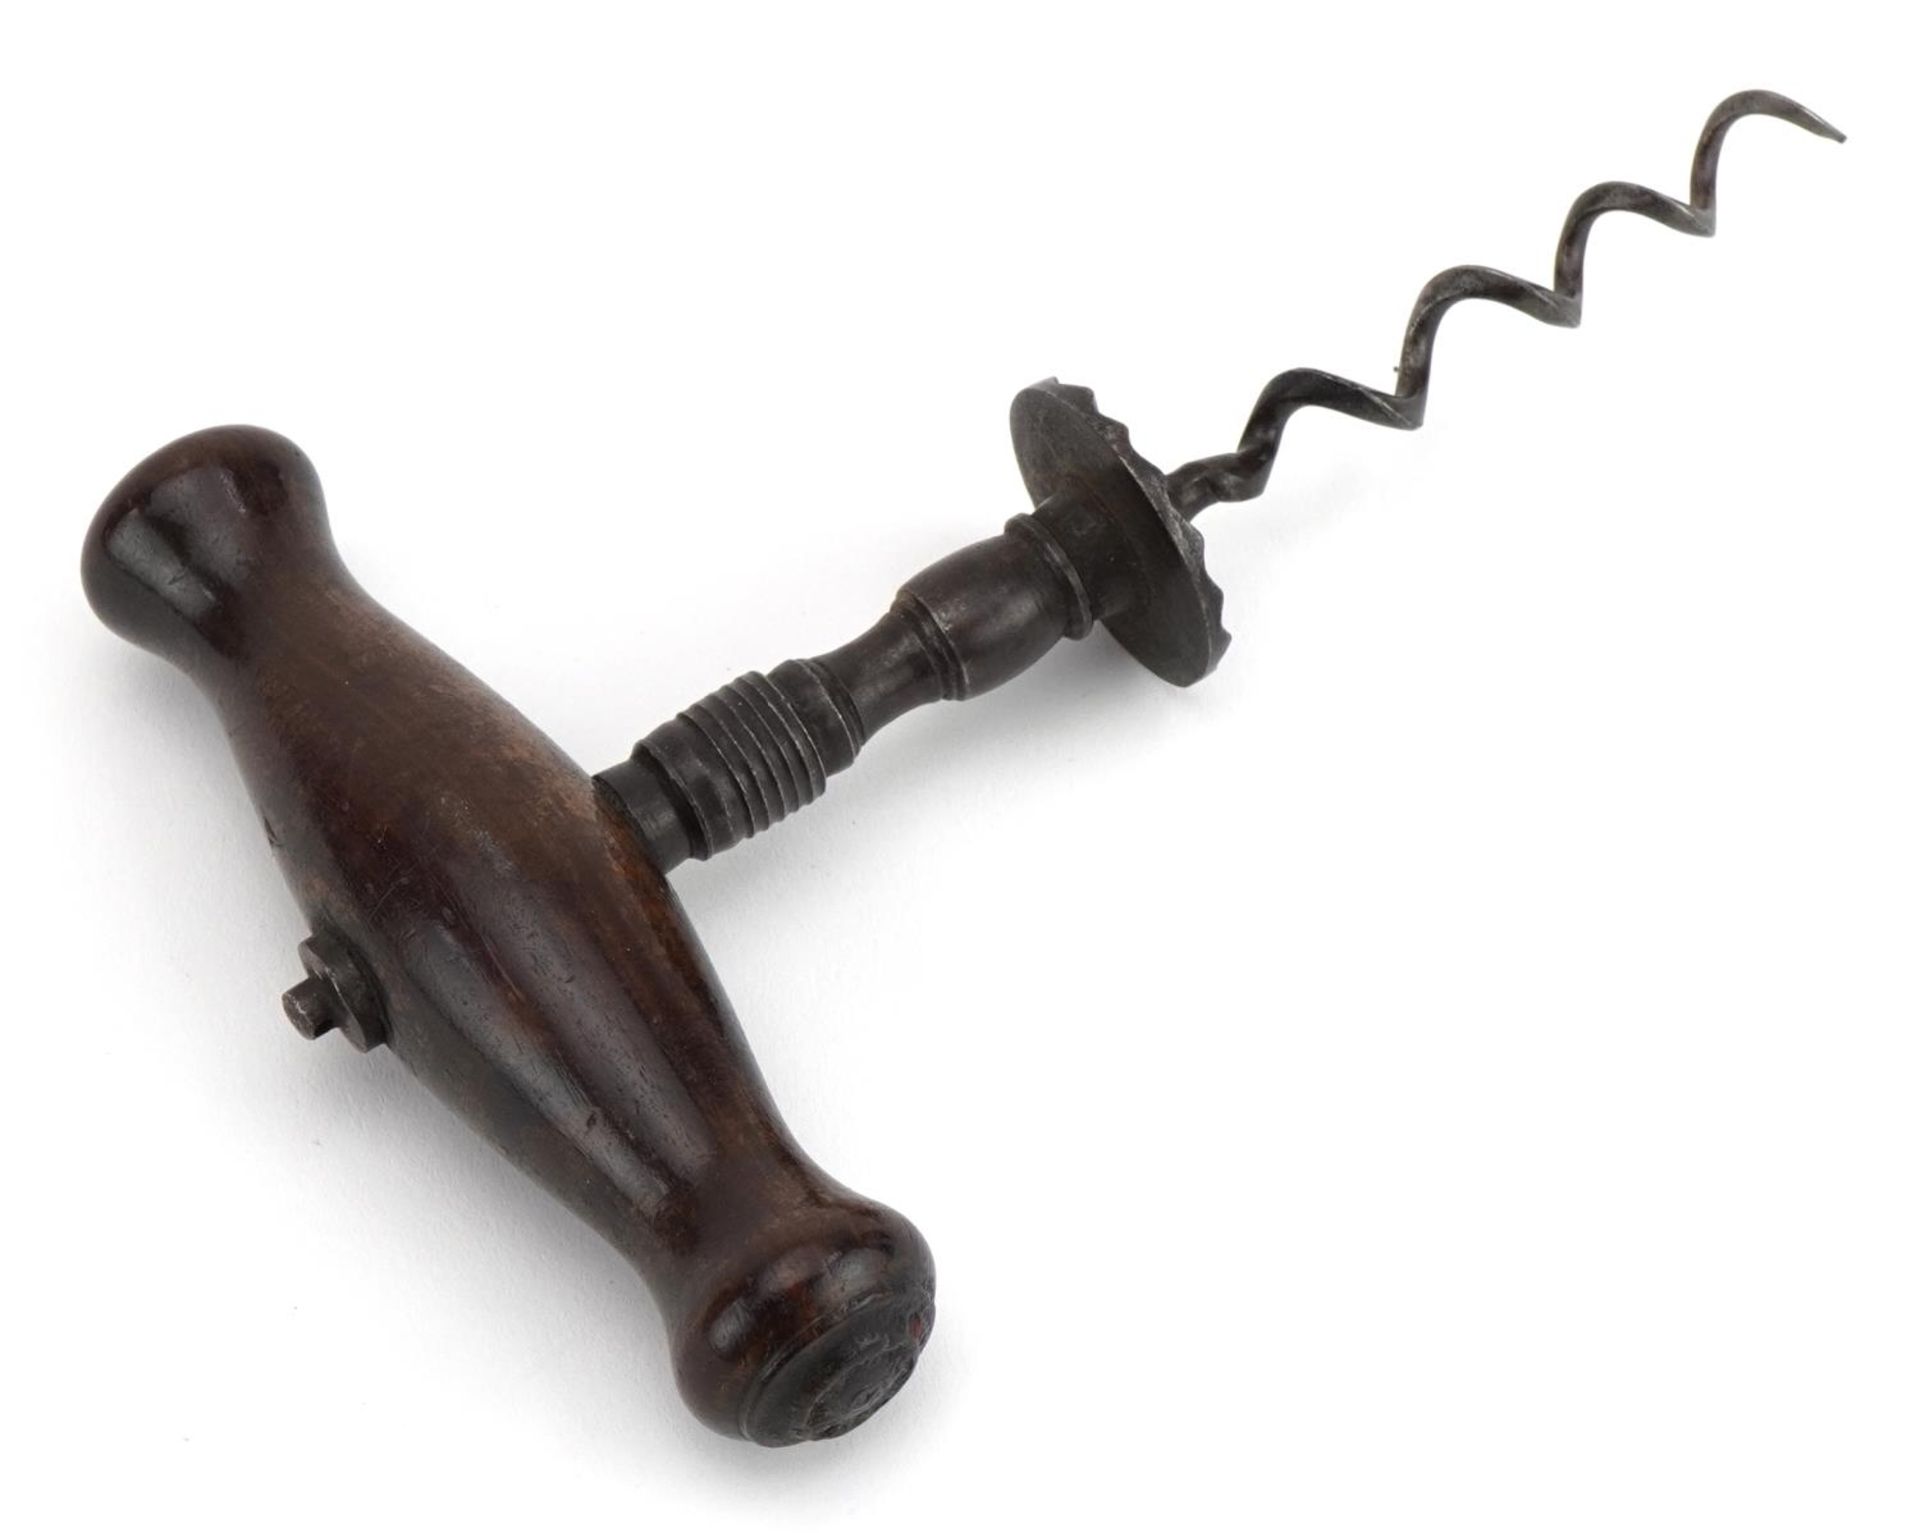 Antique steel corkscrew with hardwood handle - Image 3 of 4